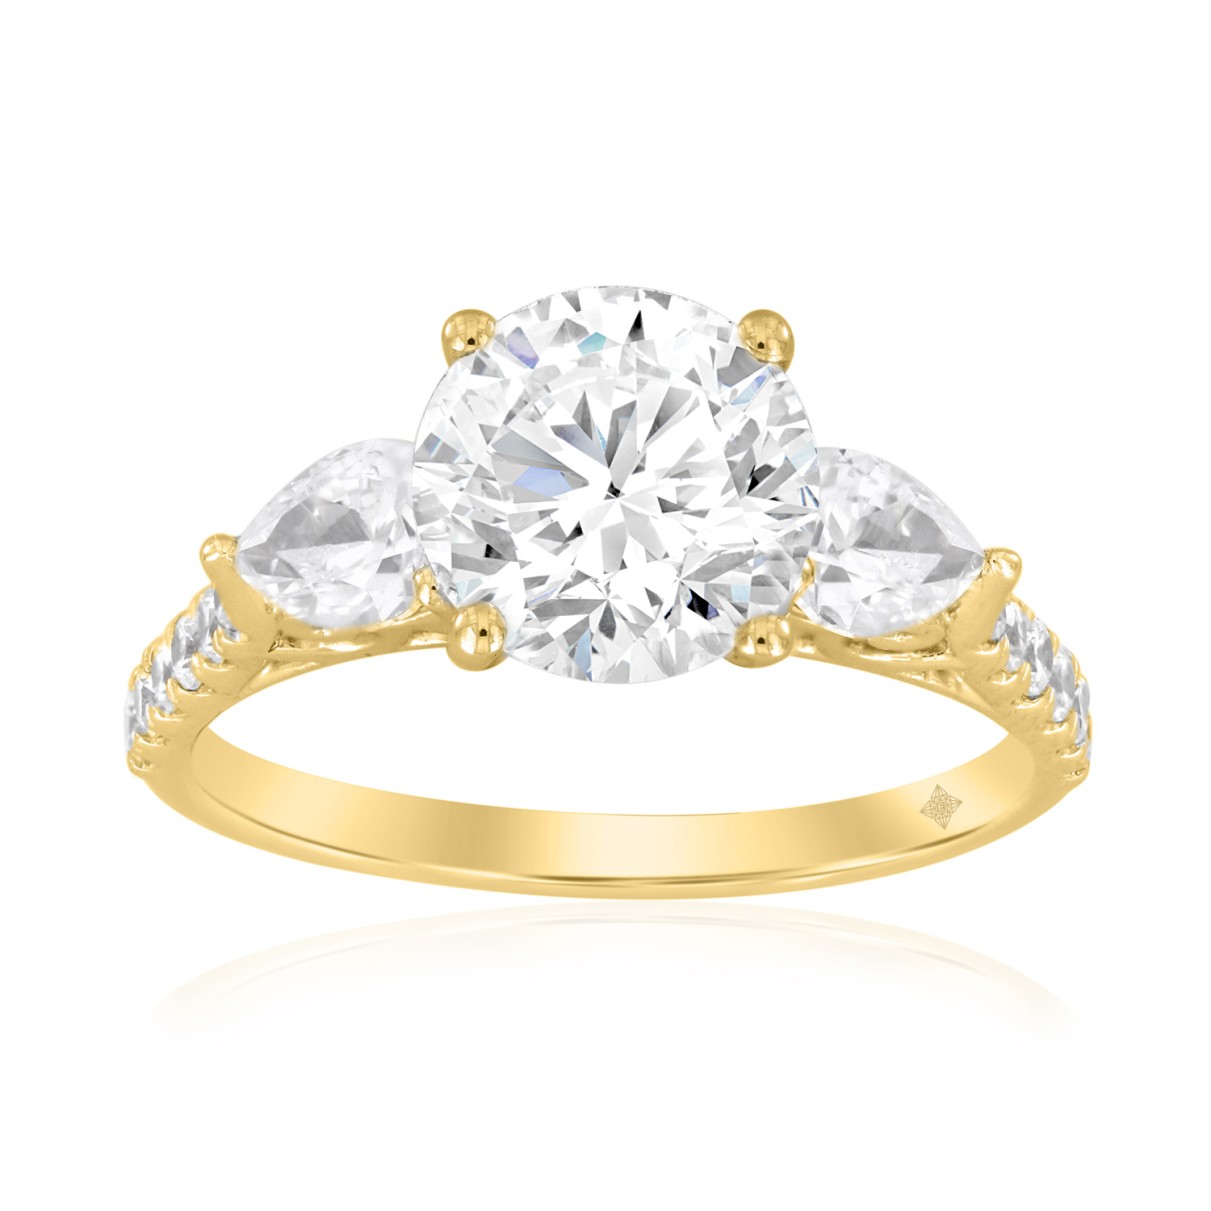 14K YELLOW GOLD 2 3/4CT ROUND/PEAR DIAMOND LADIES RING (CENTER STONE ROUND DIAMOND 2CT )